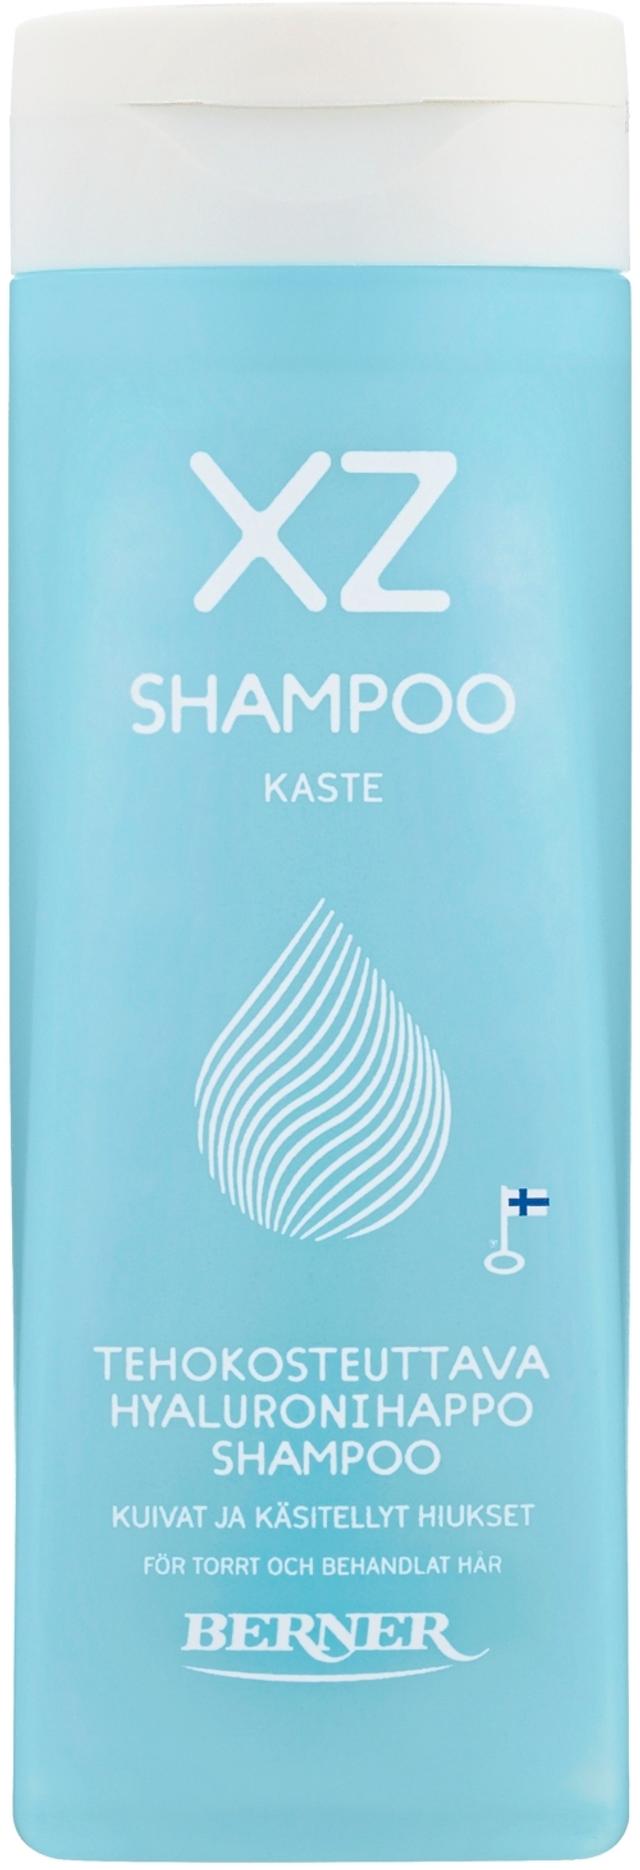 XZ 250ml Kaste tehokosteuttava hyaluronihappo shampoo